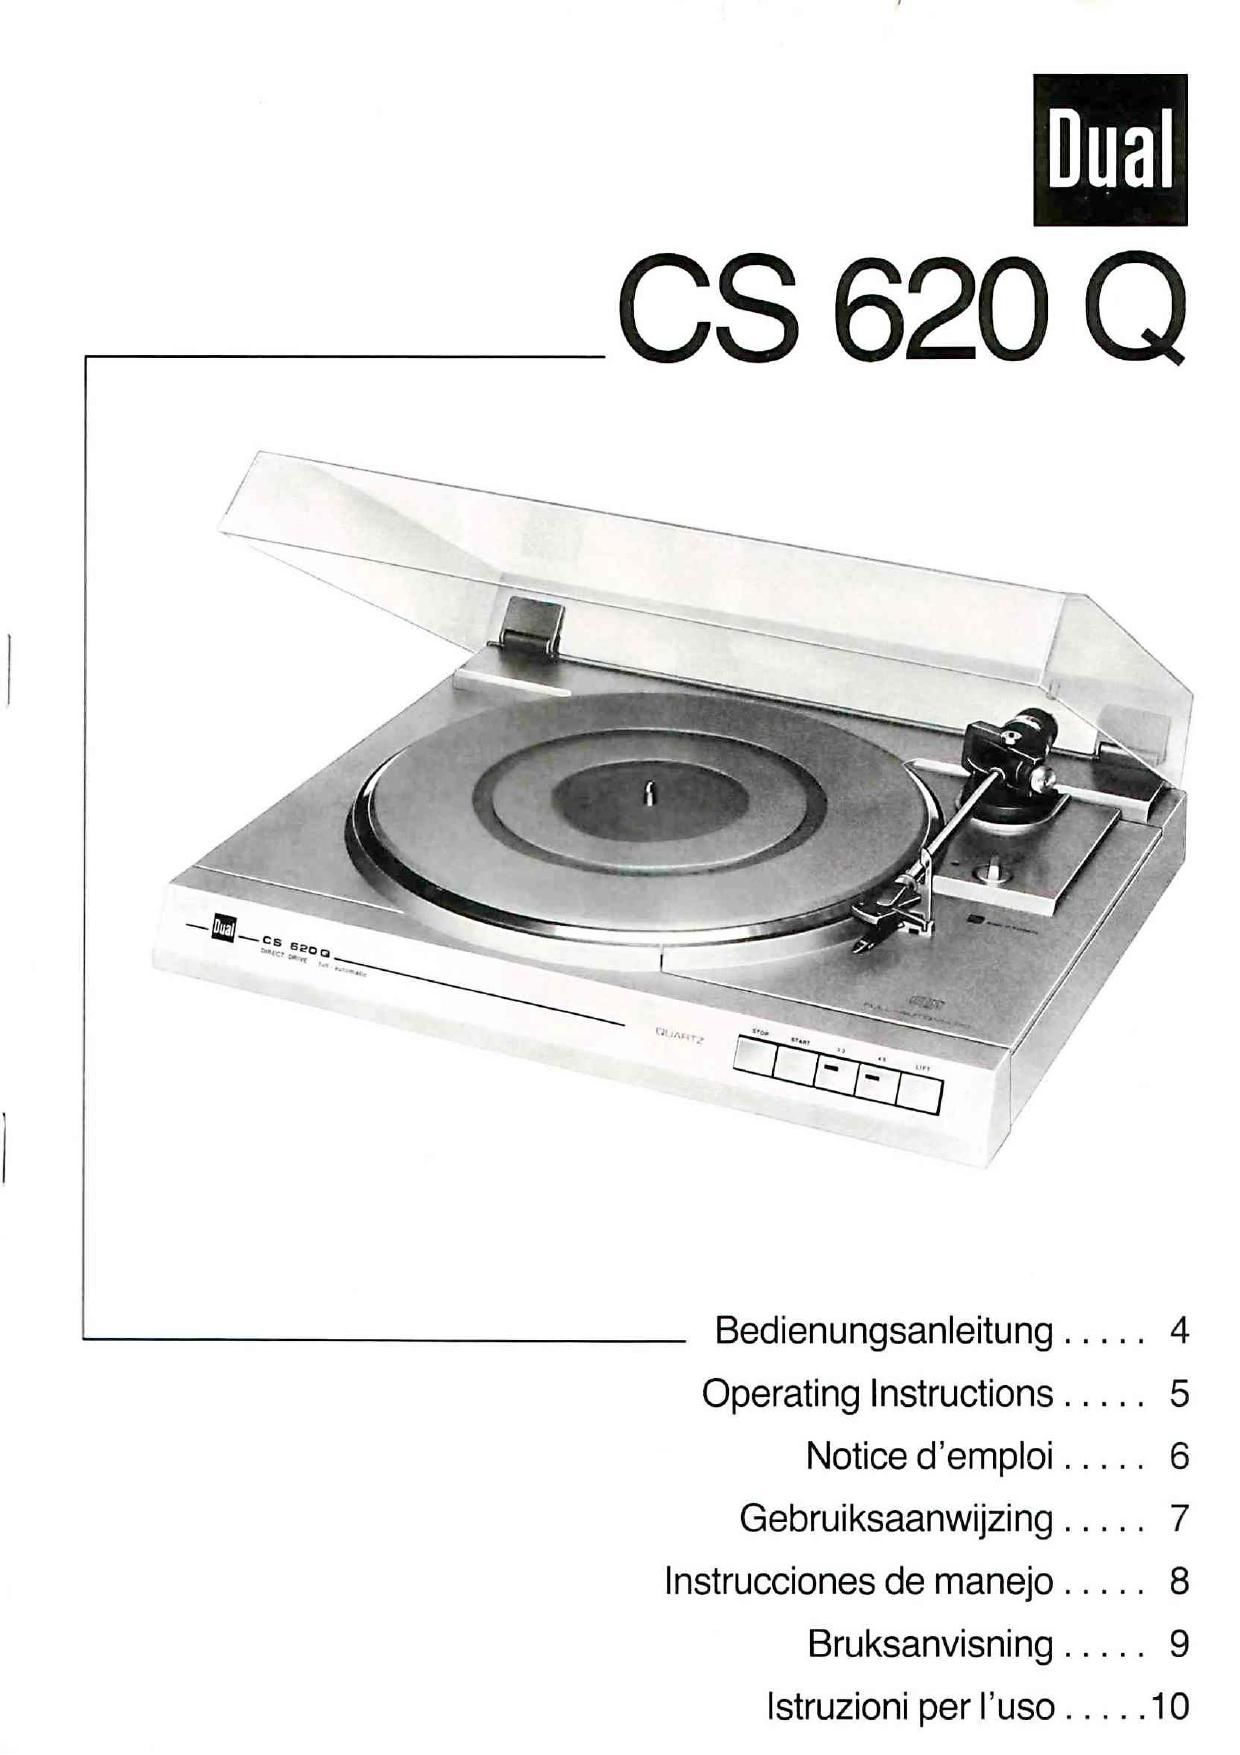 Dual 620 Q Owners Manual